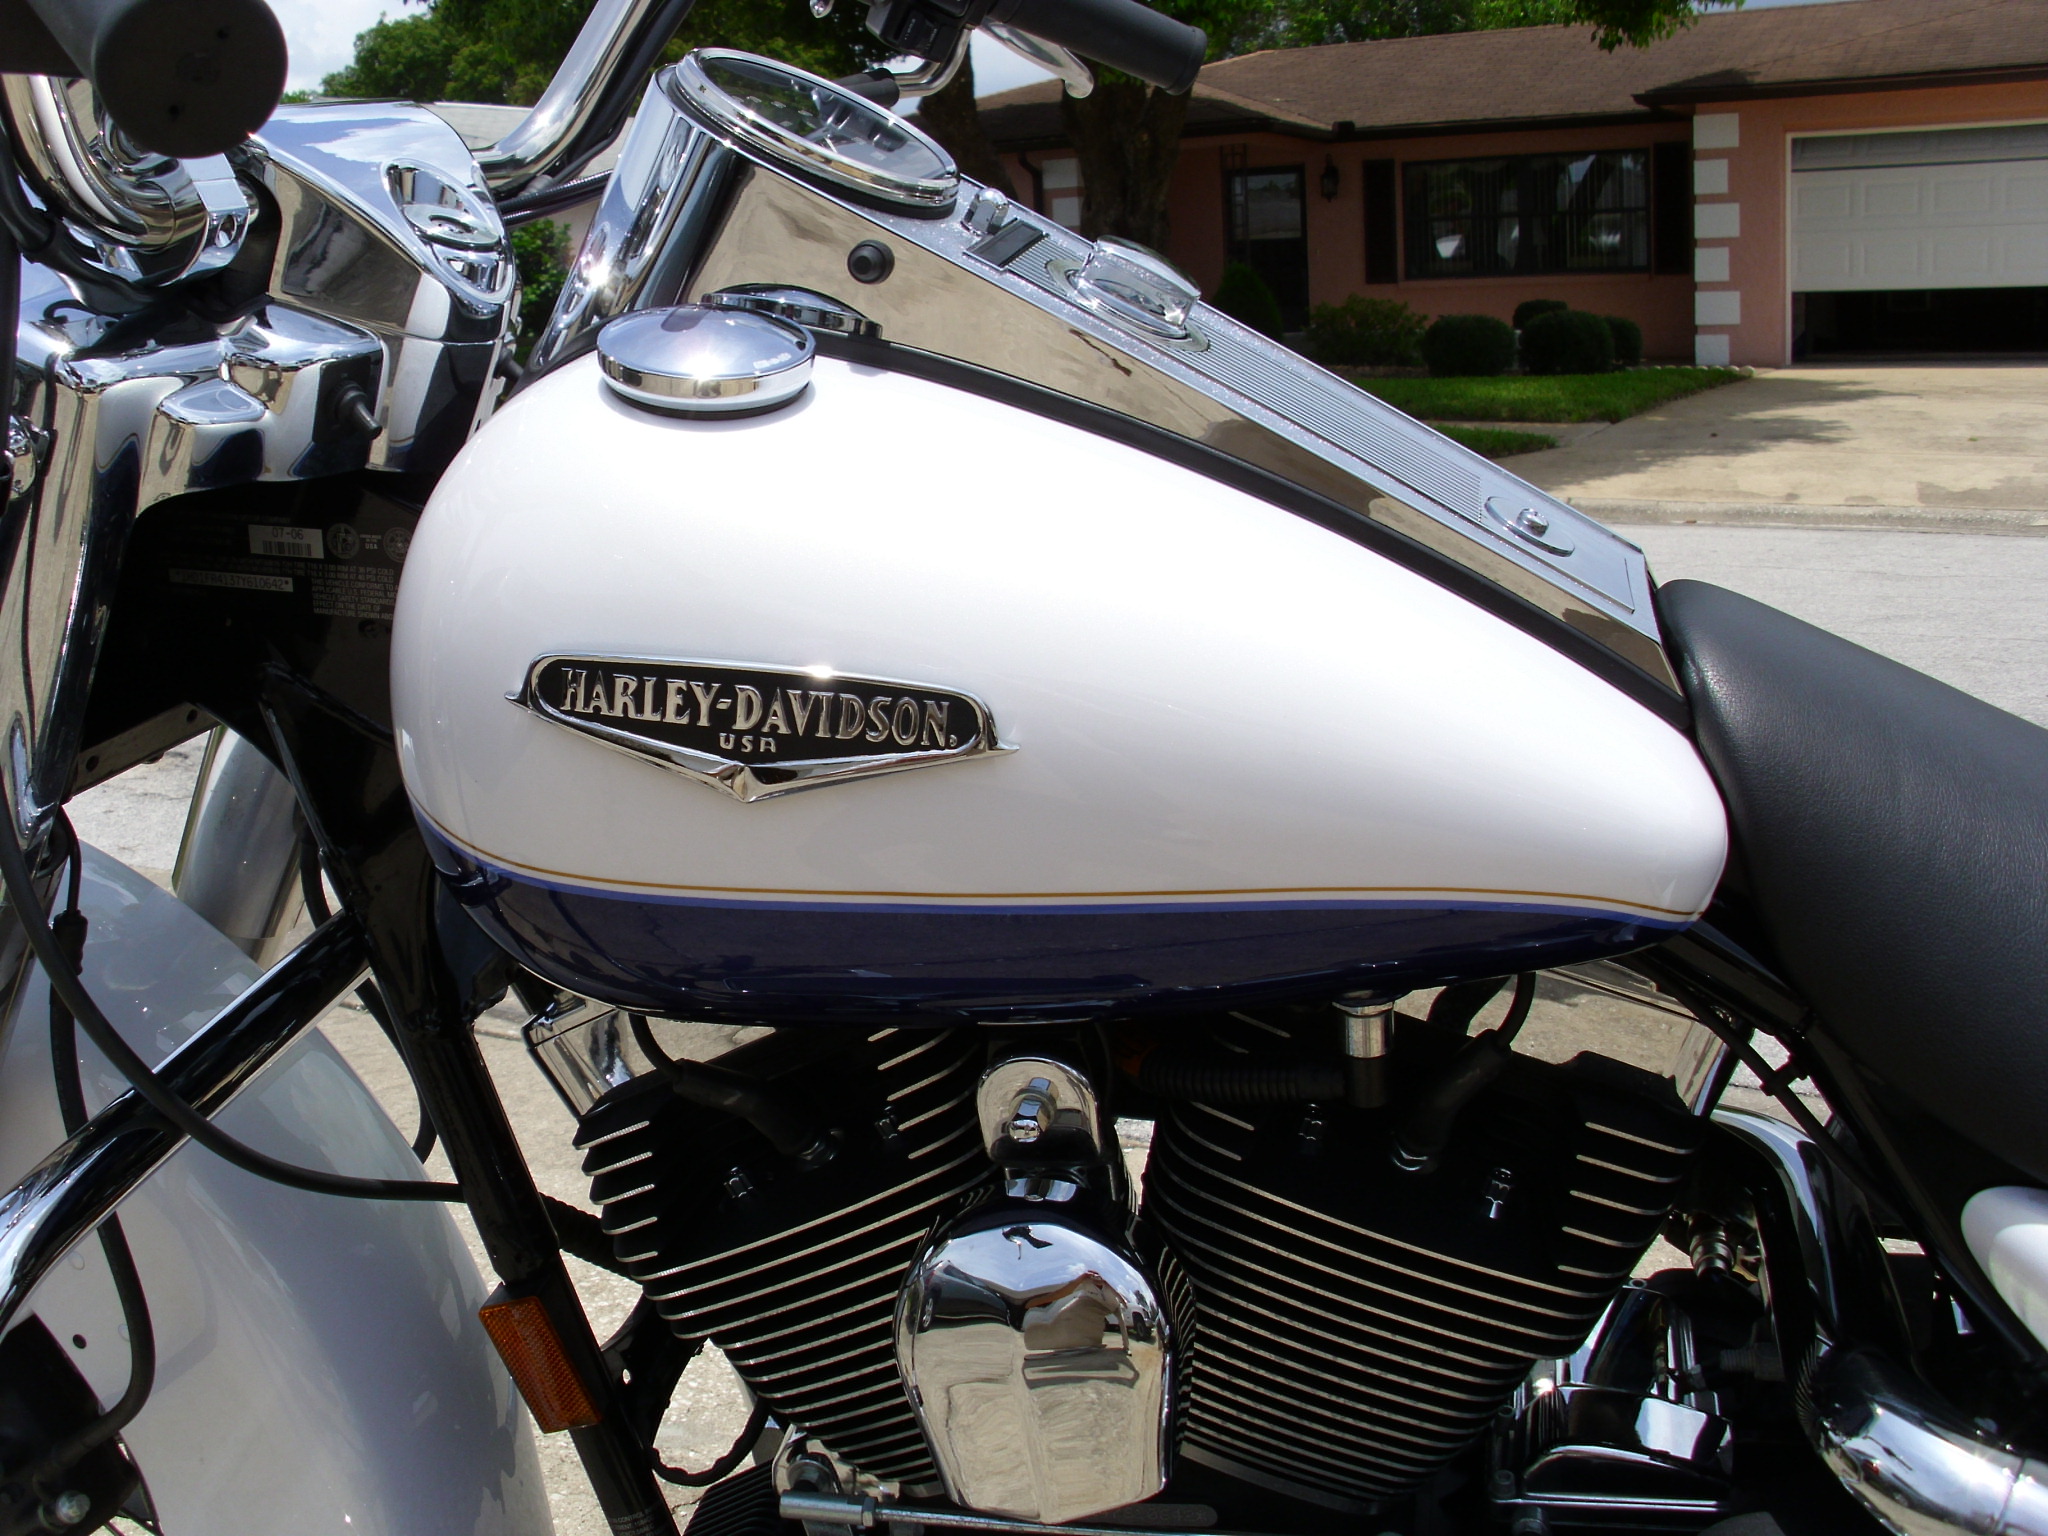 Hd Engine Brightener Advice Harley Davidson Forums